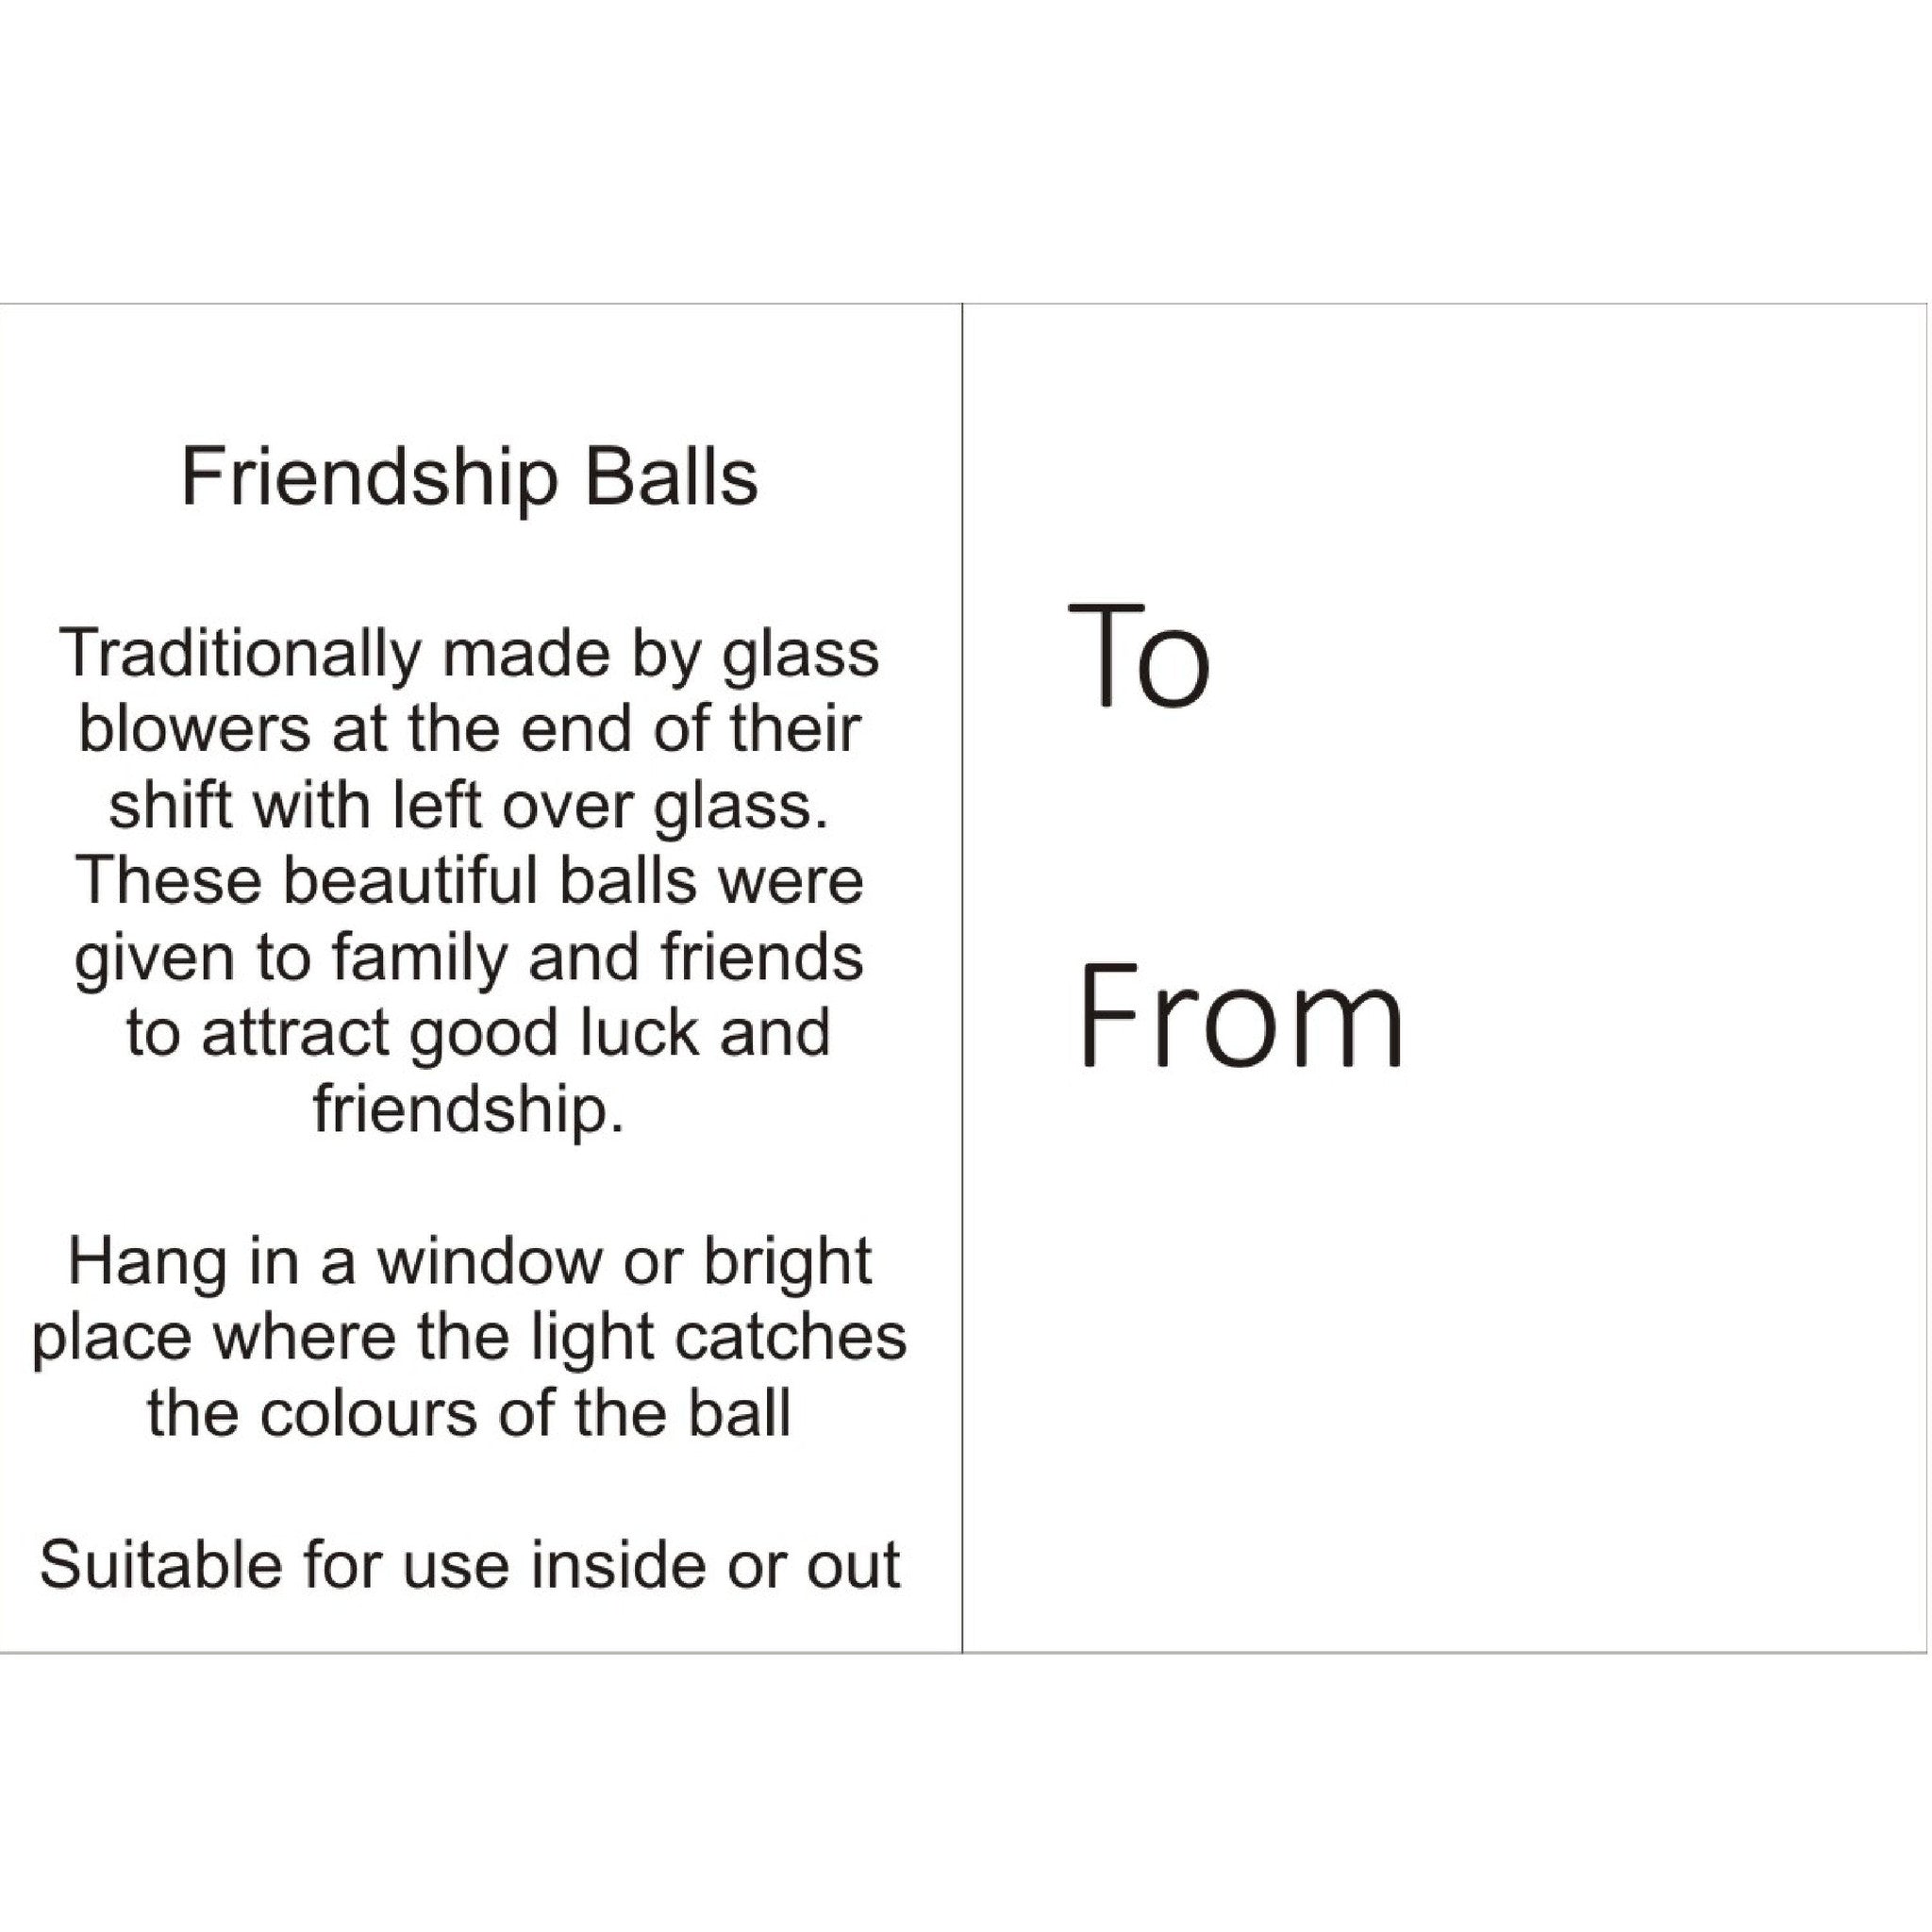 10cm Friendship Ball - Amethyst - Aspire Art Glass